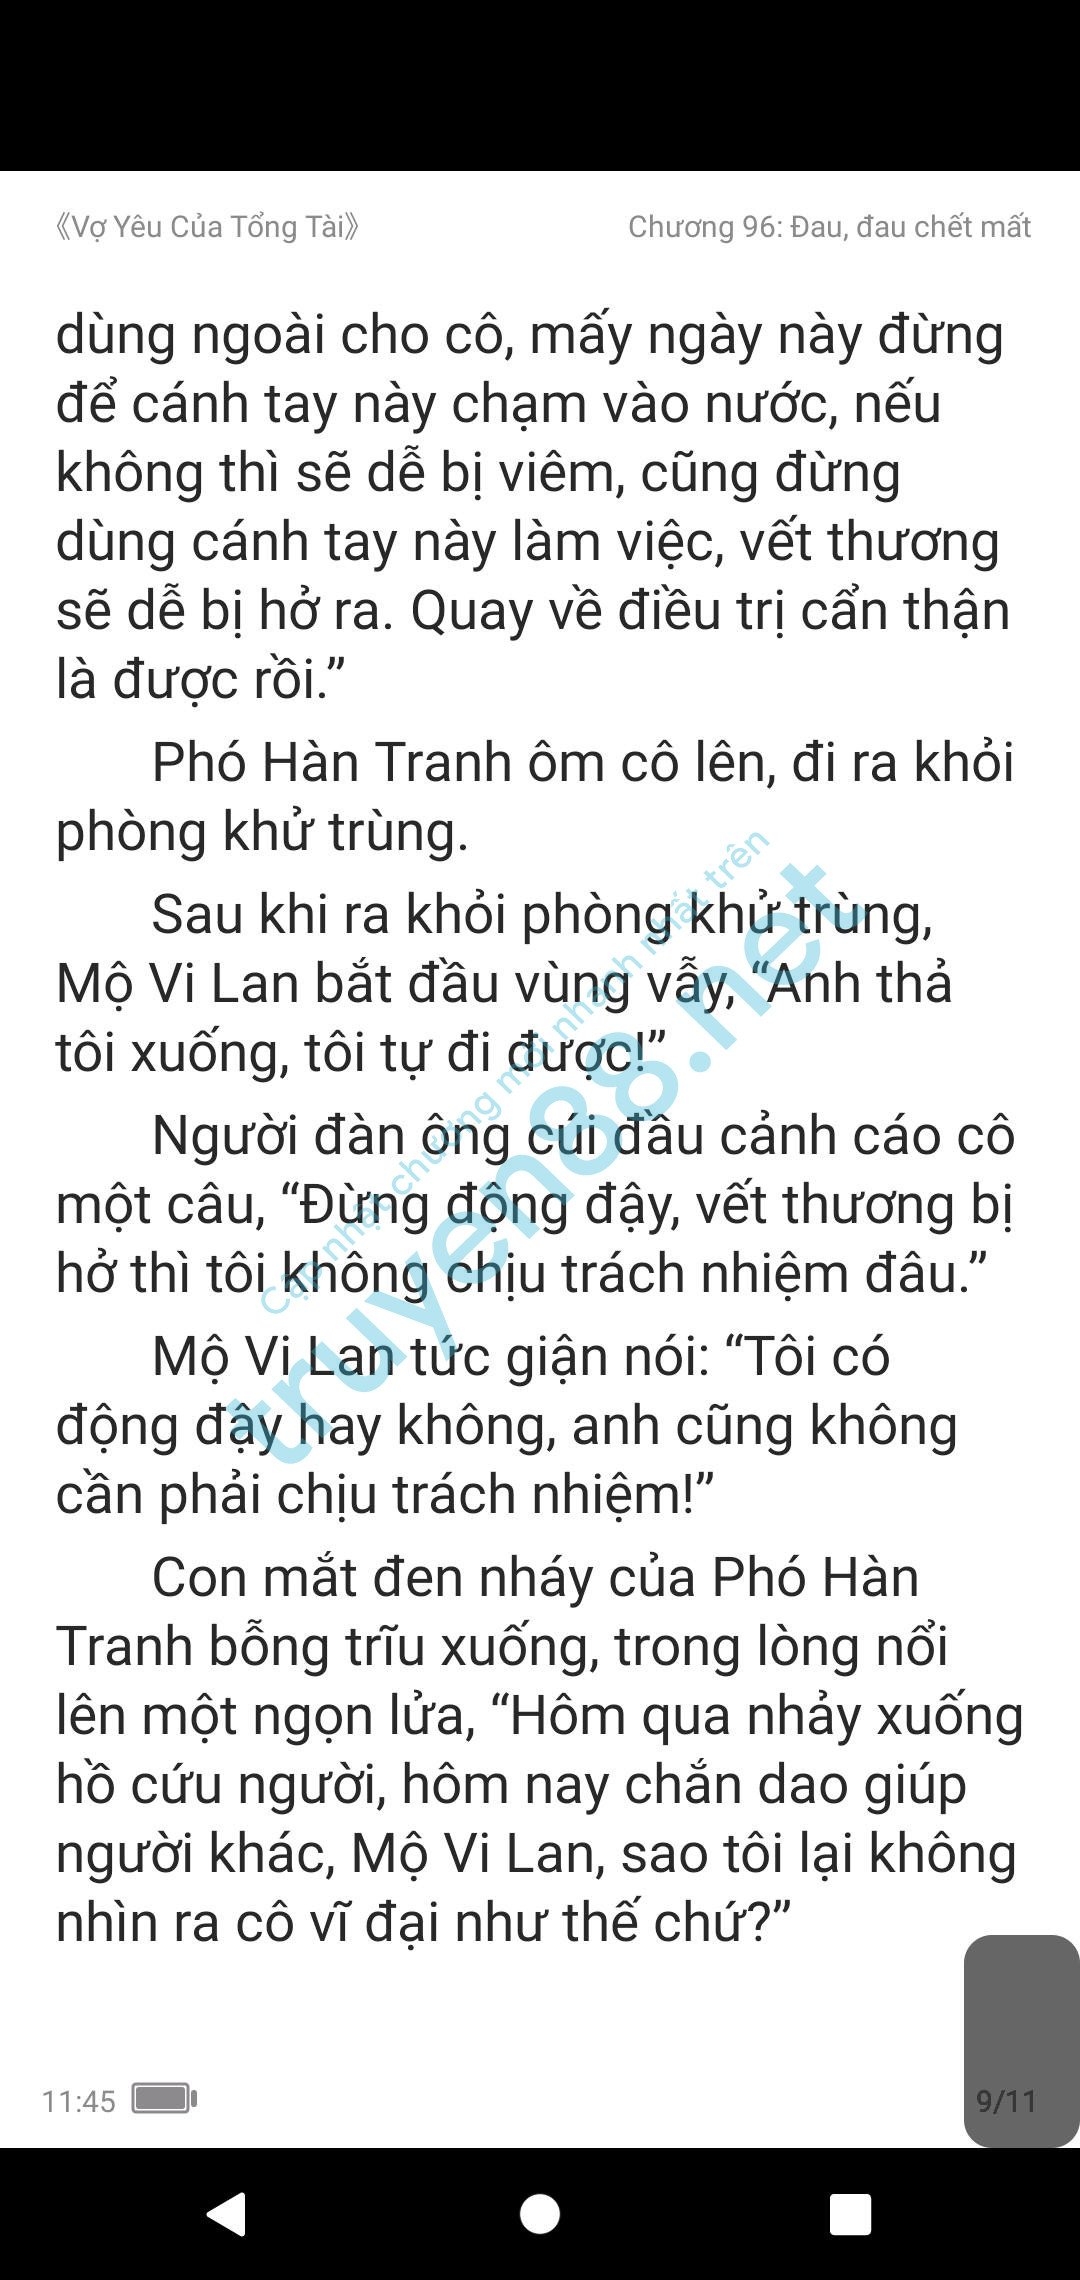 vo-yeu-cua-tong-tai-mo-vi-lan--pho-han-tranh-96-0